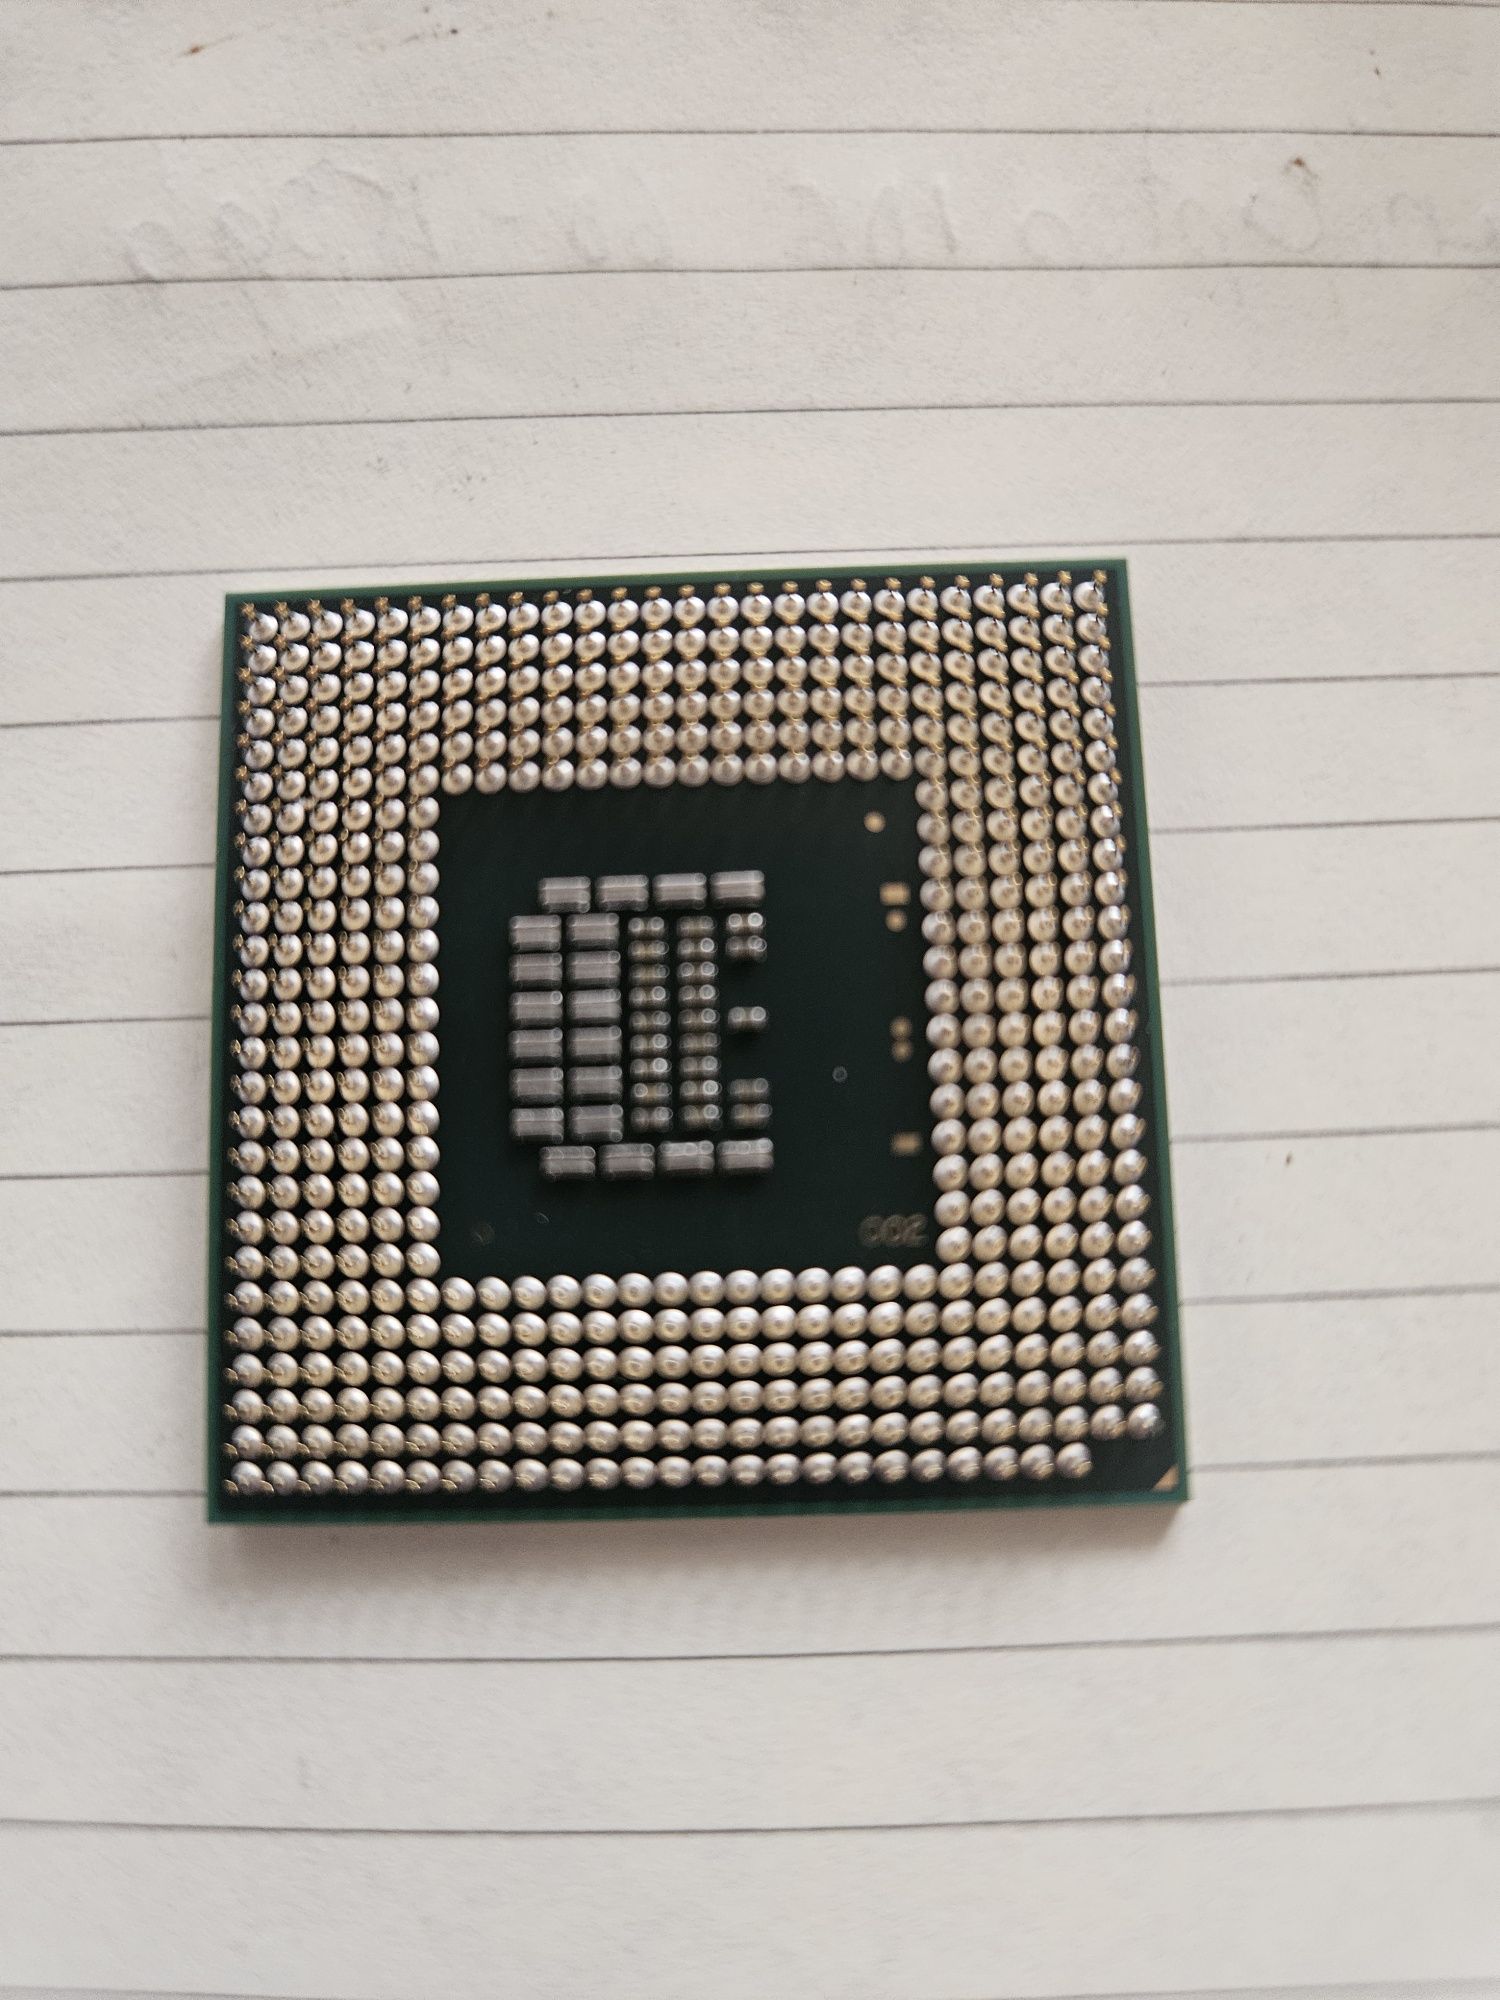 Procesor laptop intel core 2 duo T9300   2,50/6M/800